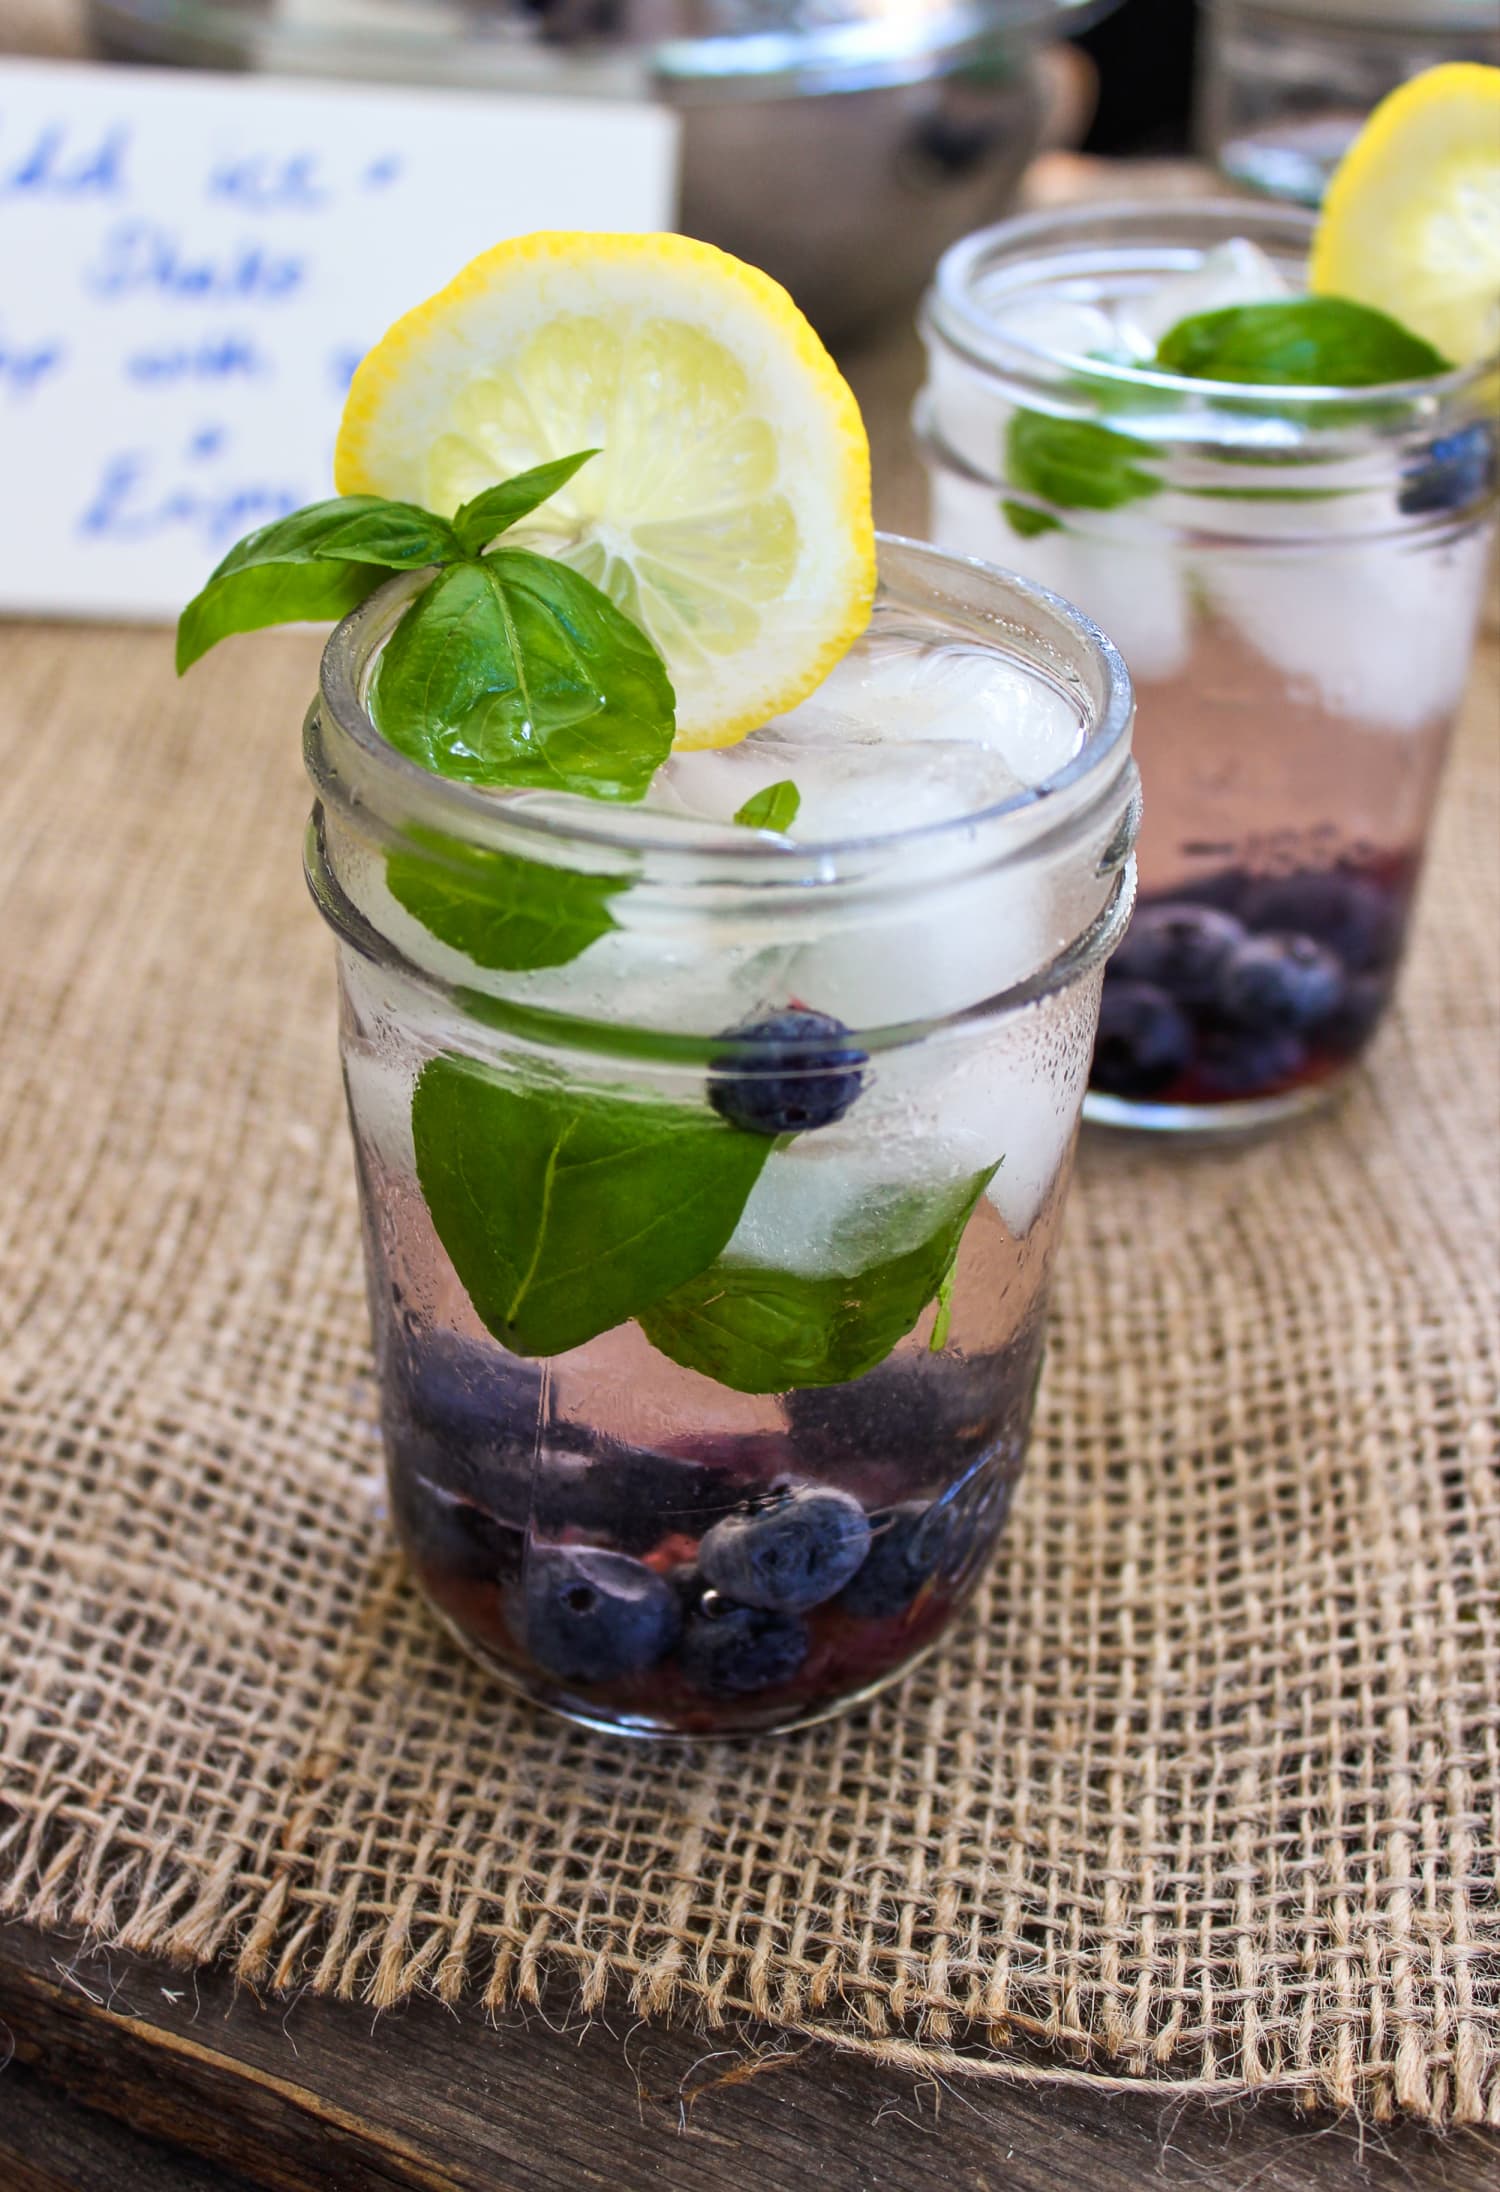 Pre-Made Drinks in Jars: Spiked Blueberry Basil Lemonade